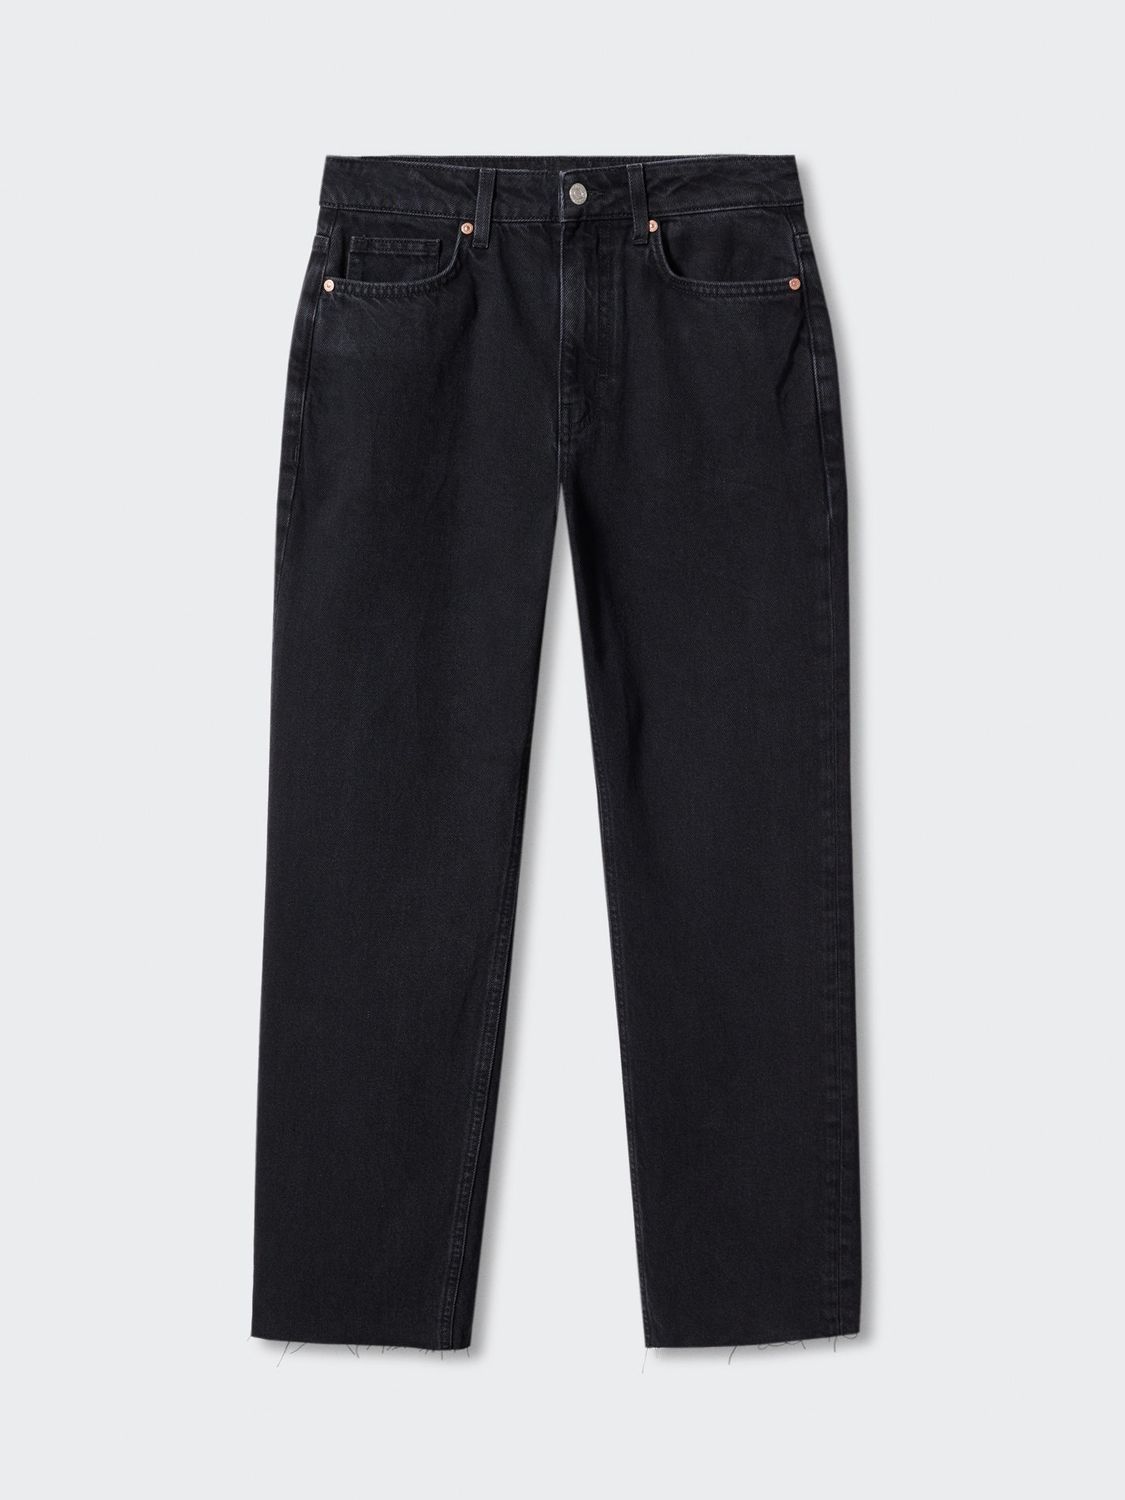 Mango Irene Frayed Hem Straight Jeans, Open Grey at John Lewis & Partners